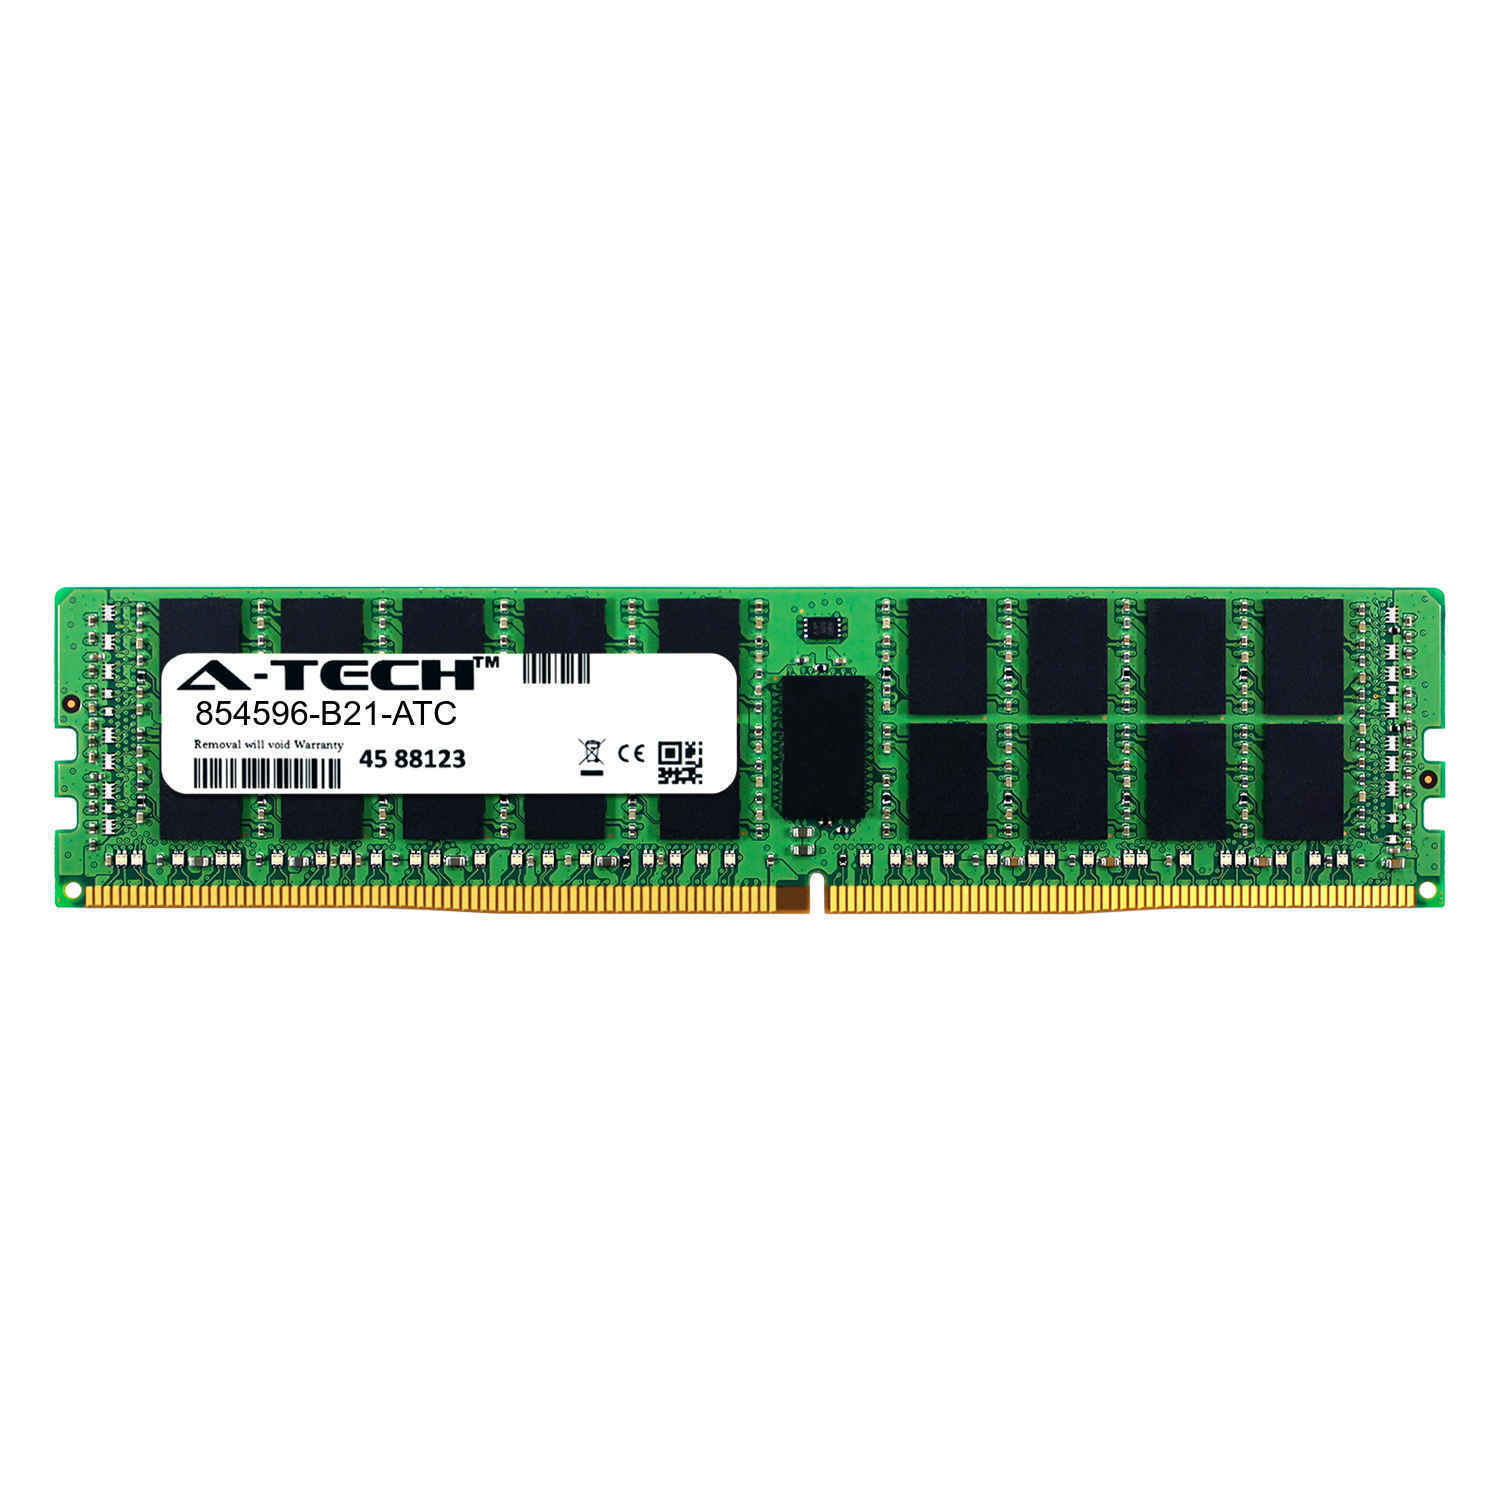 32GB DDR4 2400MHz PC4-19200R RDIMM (HP 854596-B21 Equivalent) Server Memory RAM